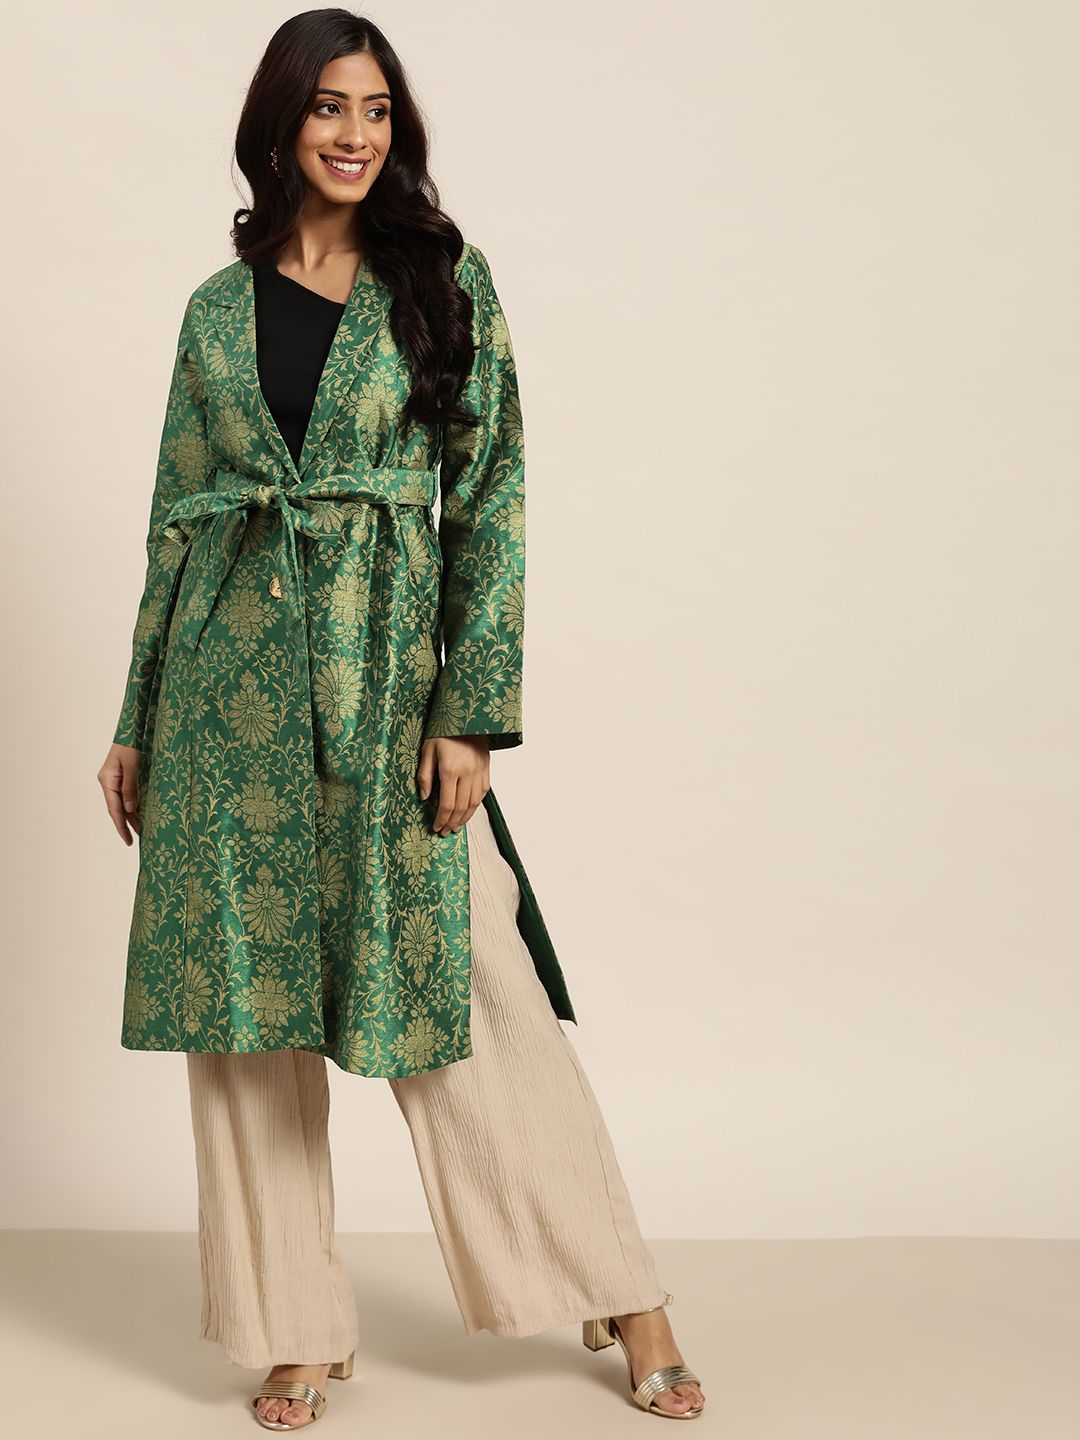 Shae by SASSAFRAS Women Green & Golden Jacquard Floral Self-Belt Long Jacket Price in India